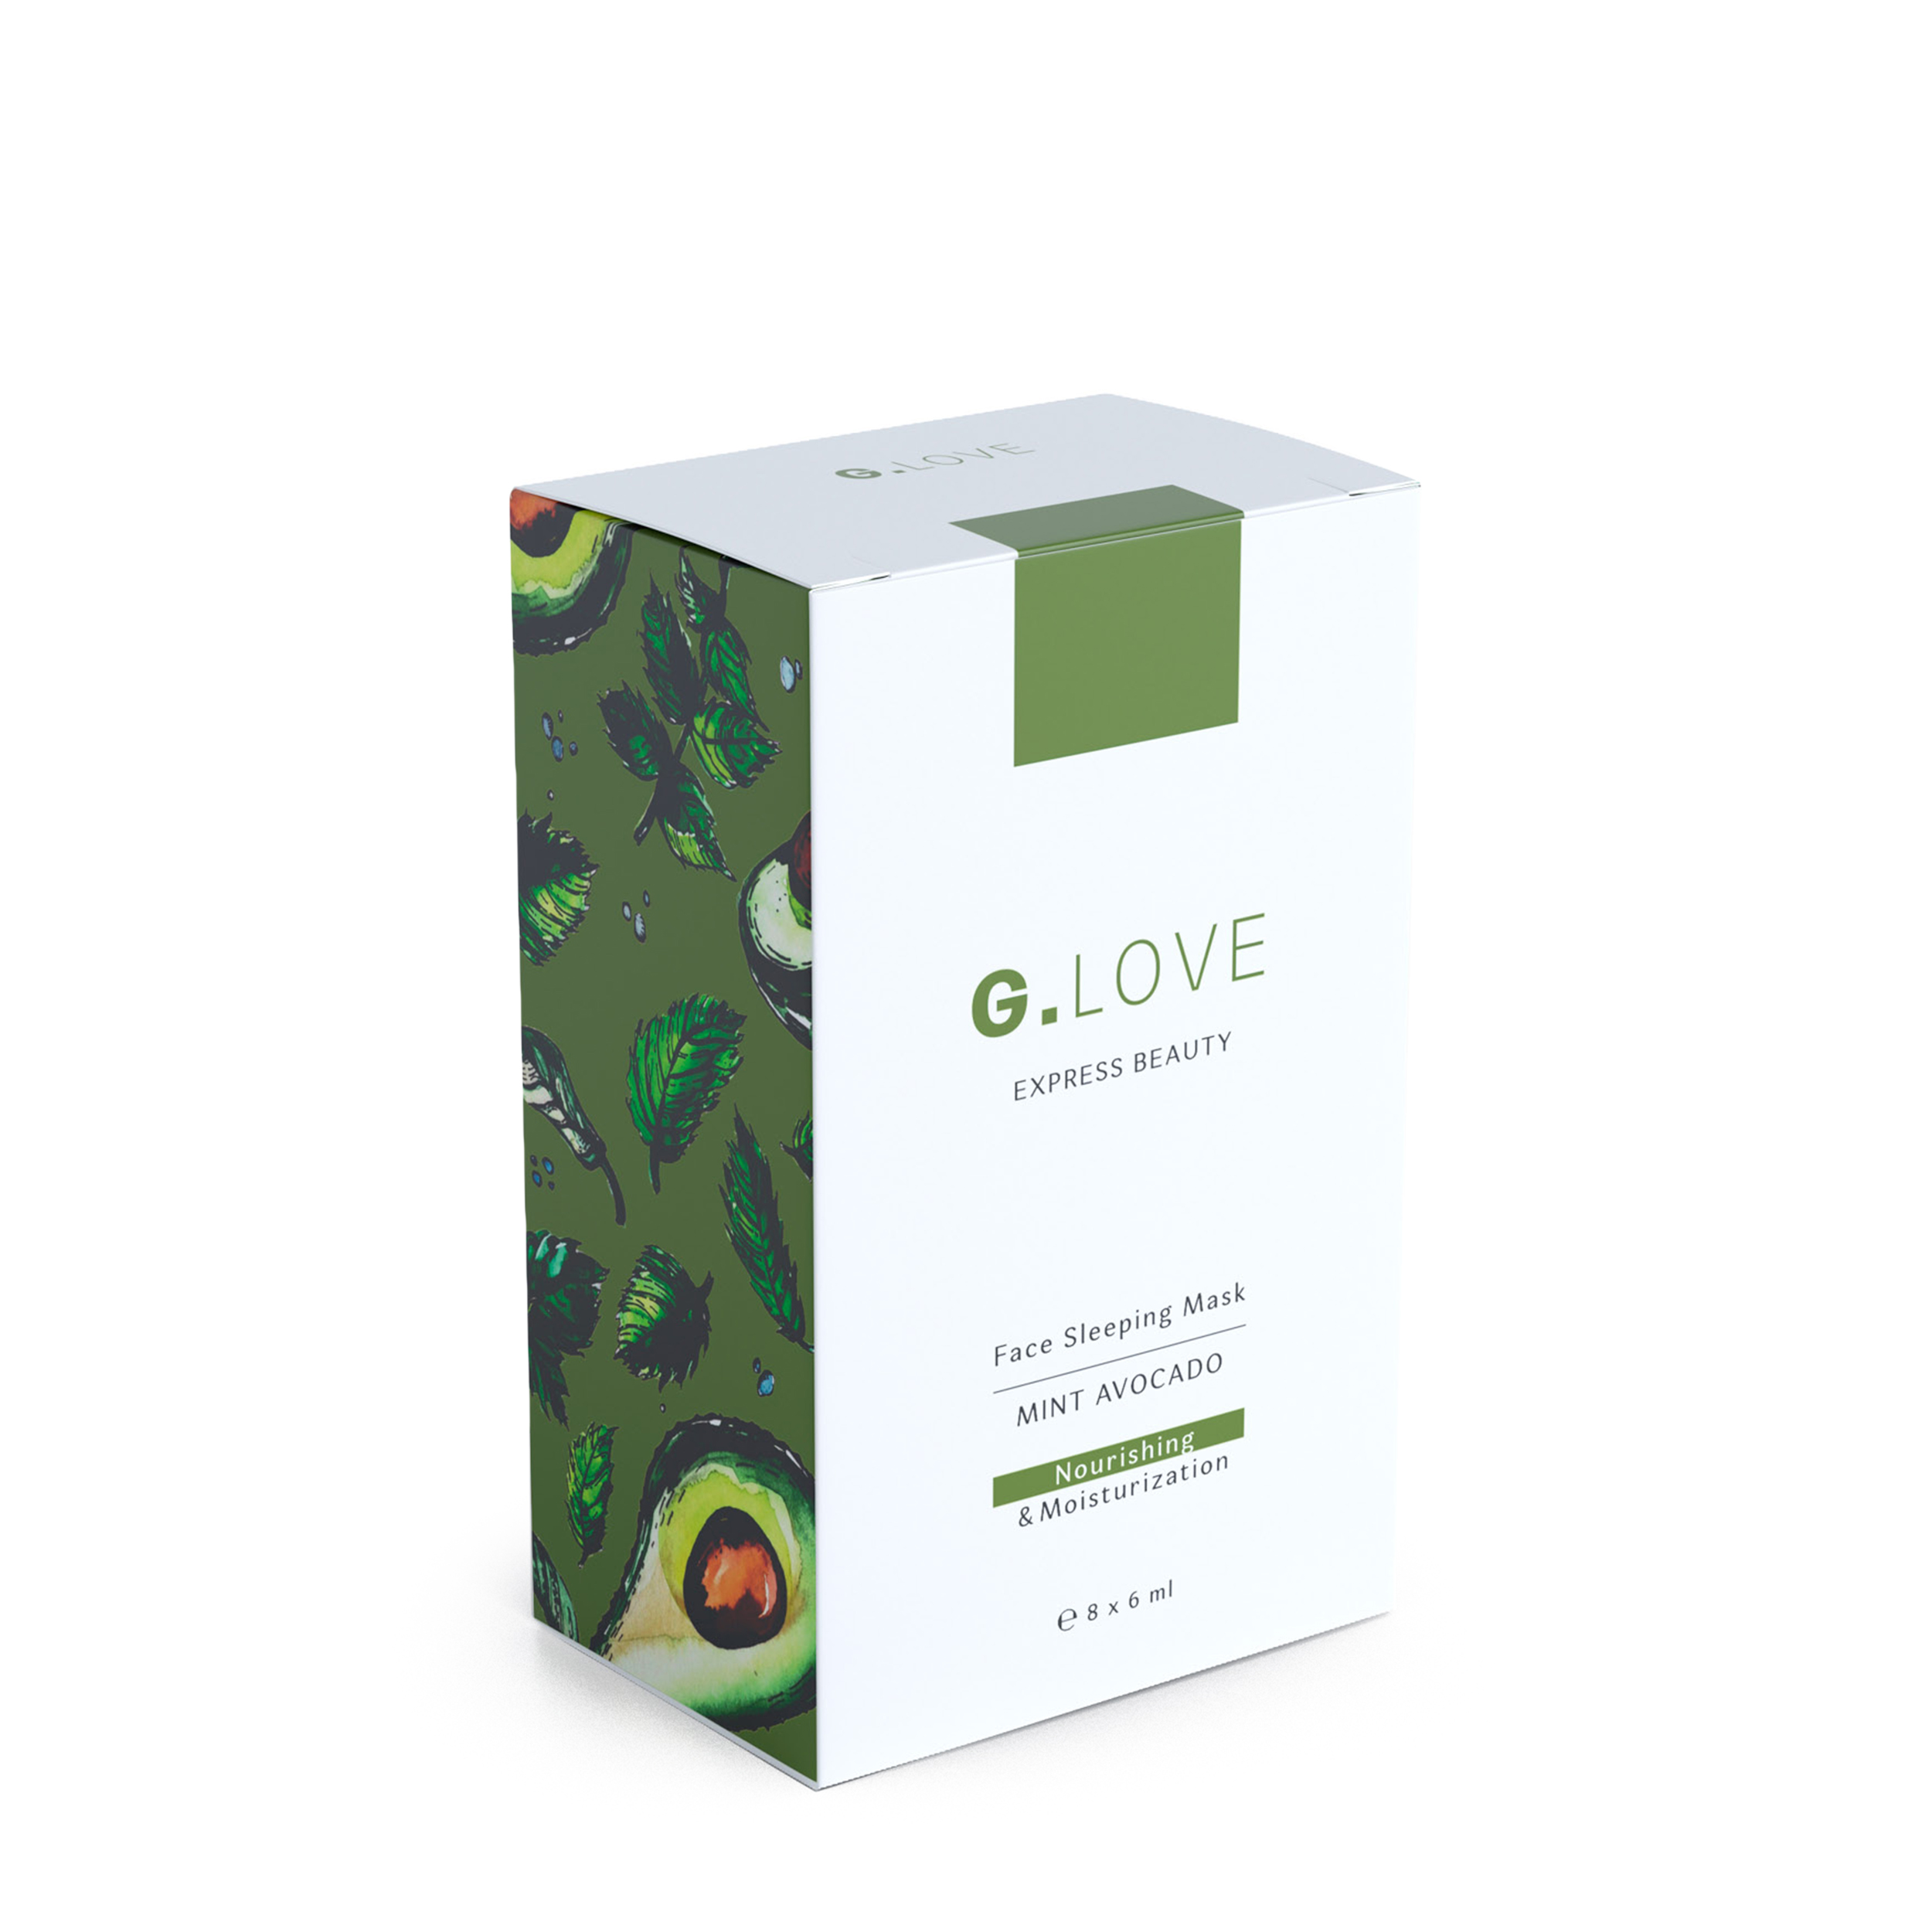 G.LOVE G.LOVE Ночная маска для лица Mint Avocado 8x6 мл от Foambox